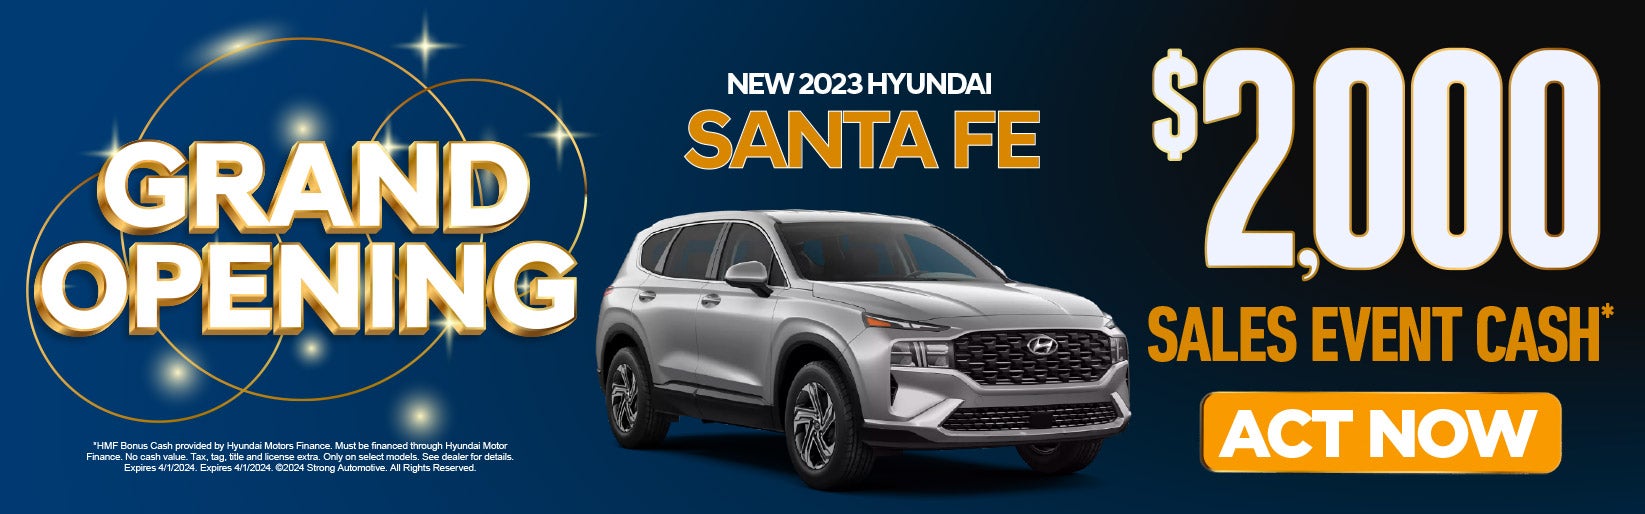 New 2023 Hyundai Santa Fe $2000 Sales Event Cash*